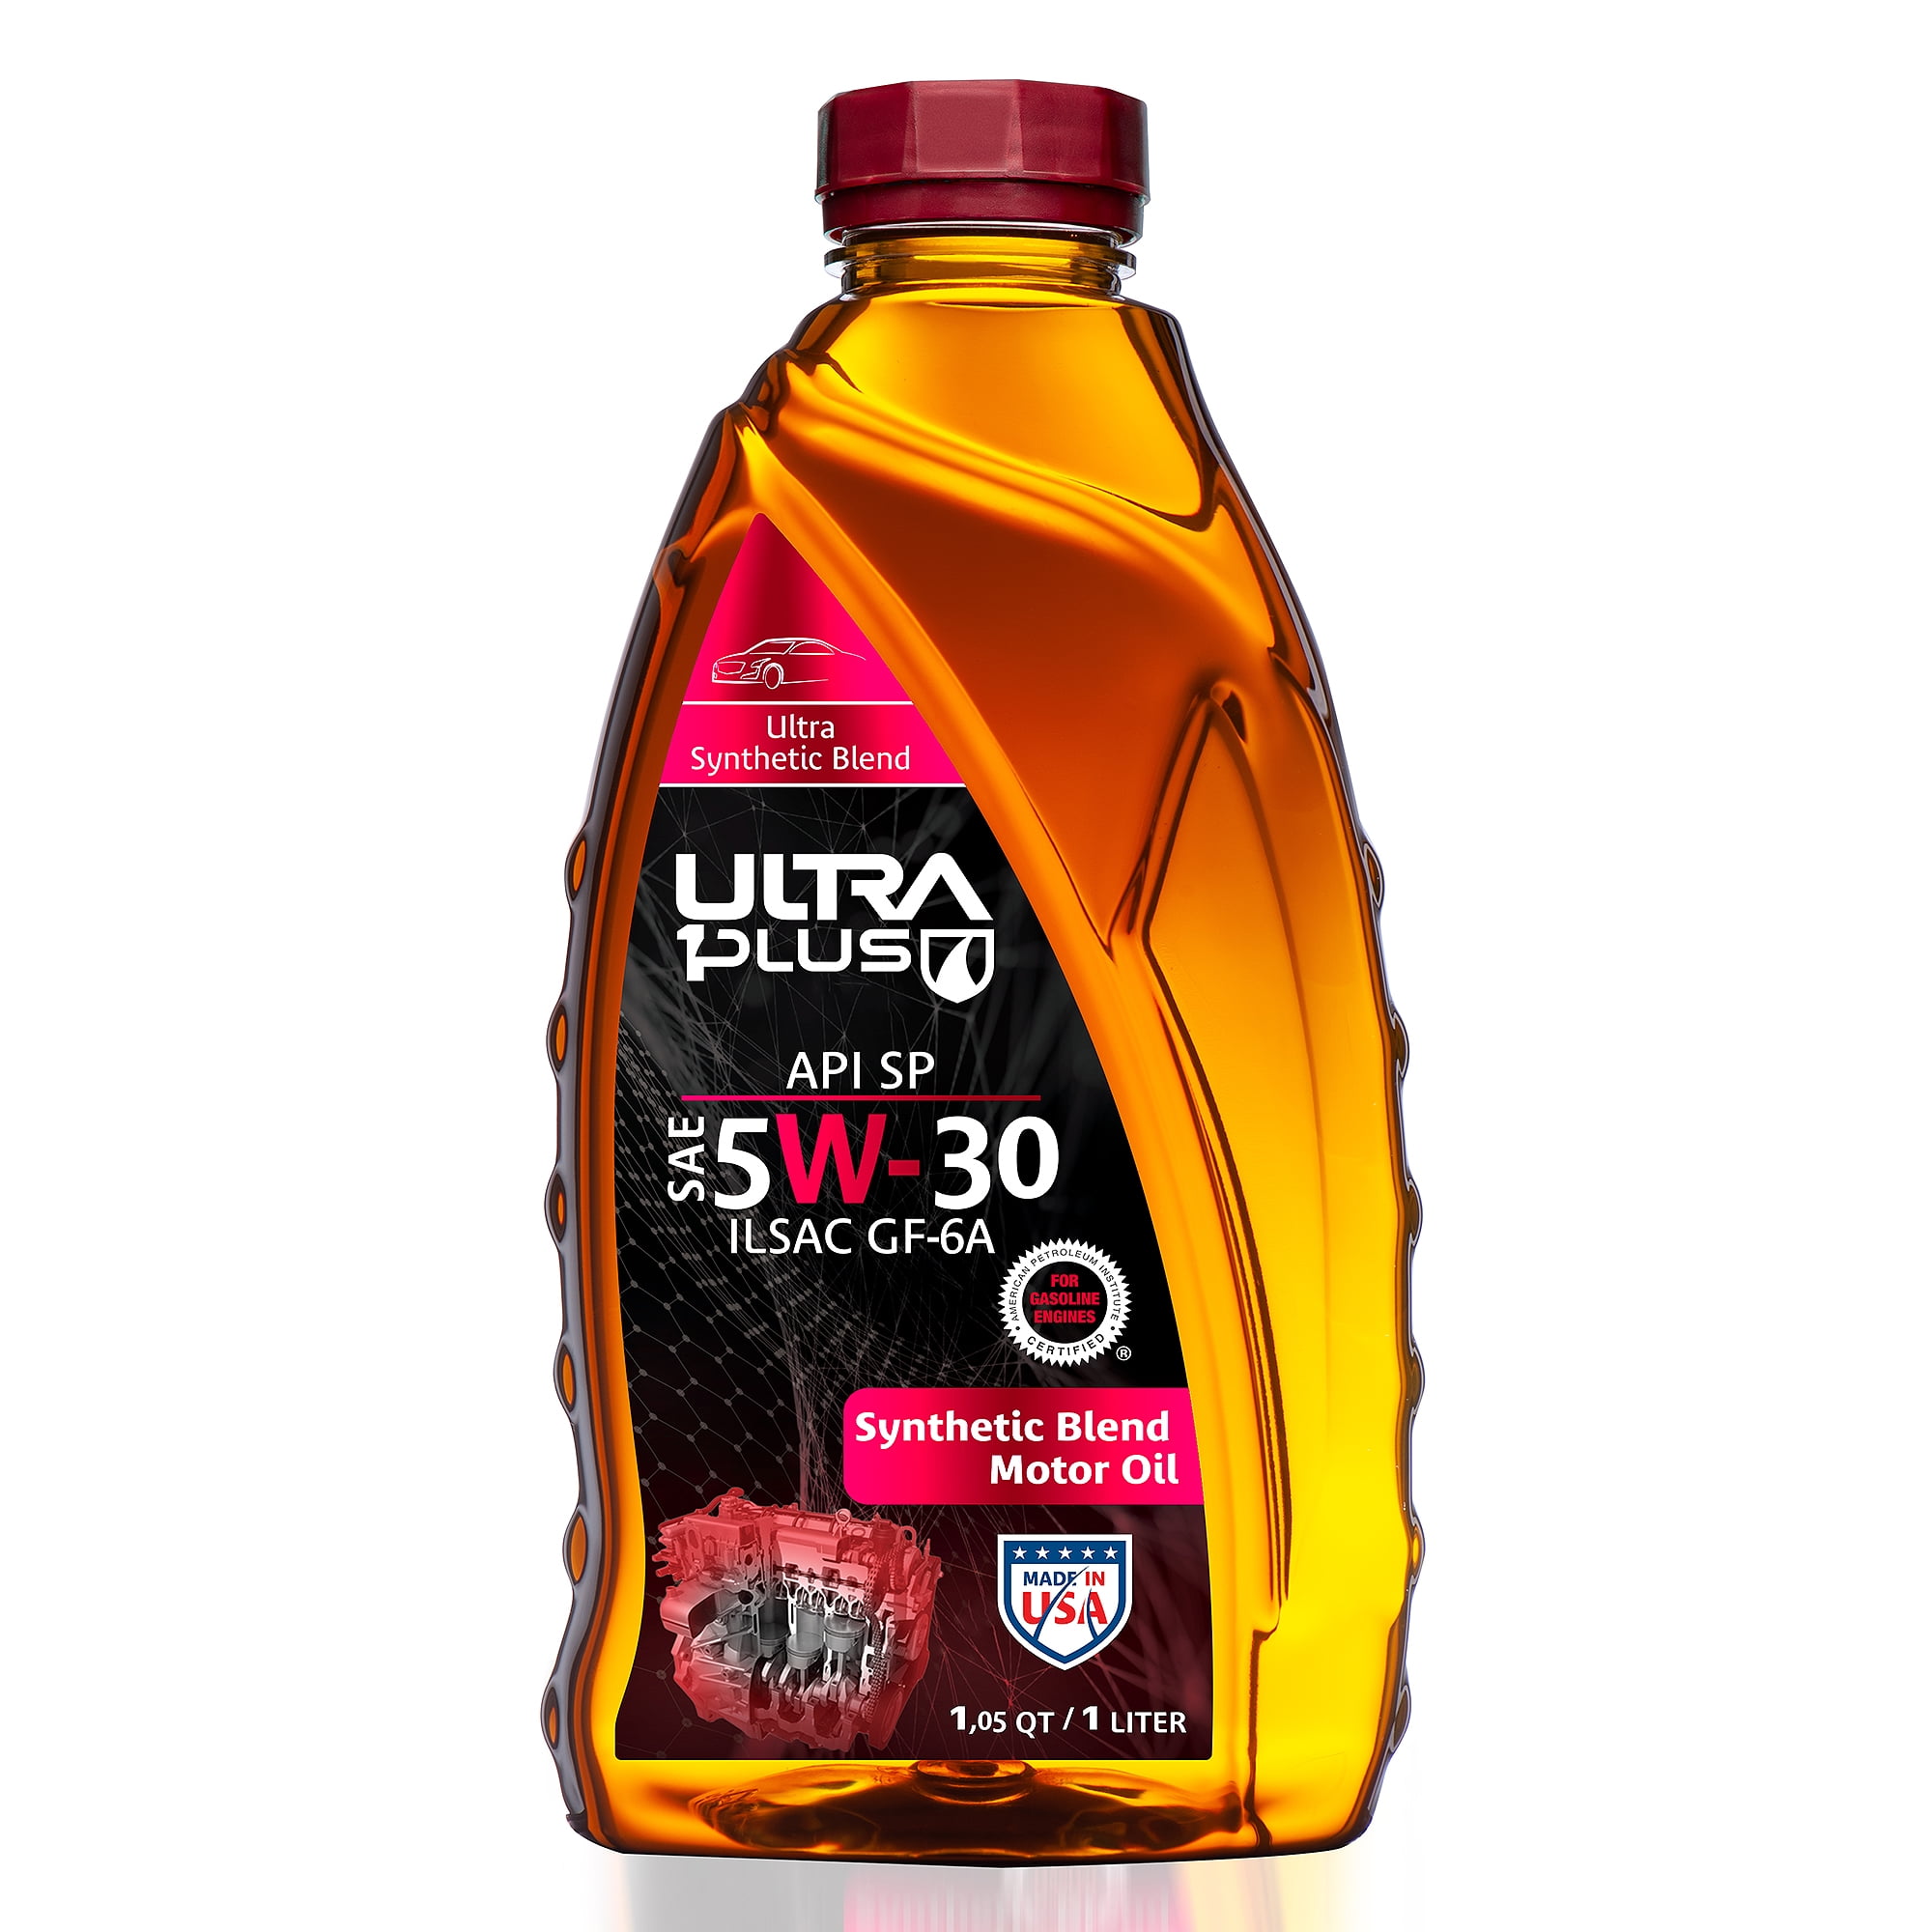 Ultra1Plus SAE 5W-30 Synthetic Blend Motor Oil, API SP ILSAC GF-6A .